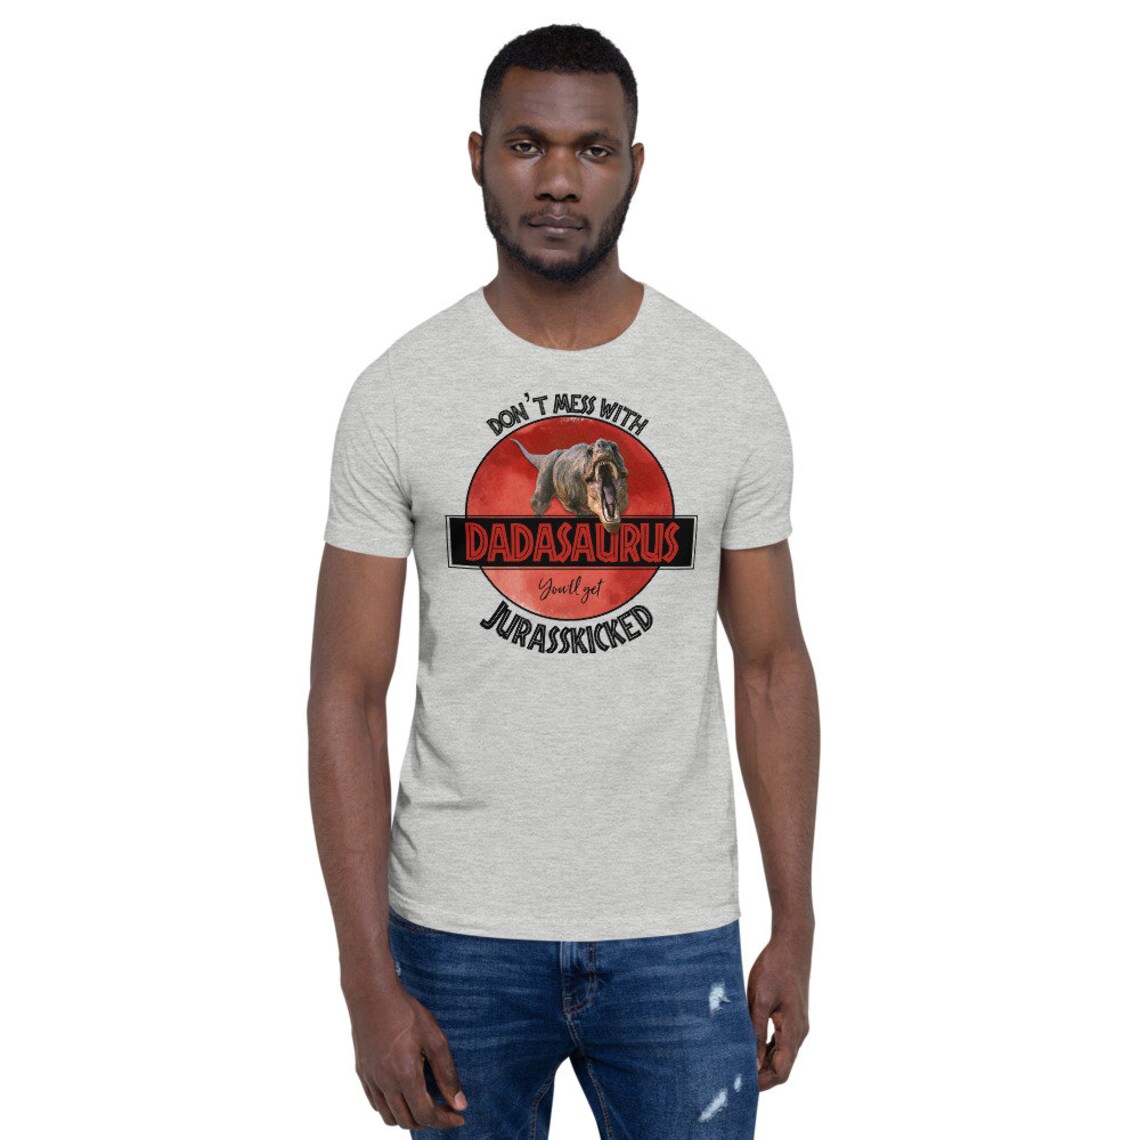 Dadasaurus Shirt Dad-a-saurus Shirt Dadasaurus Tee Shirt | Etsy